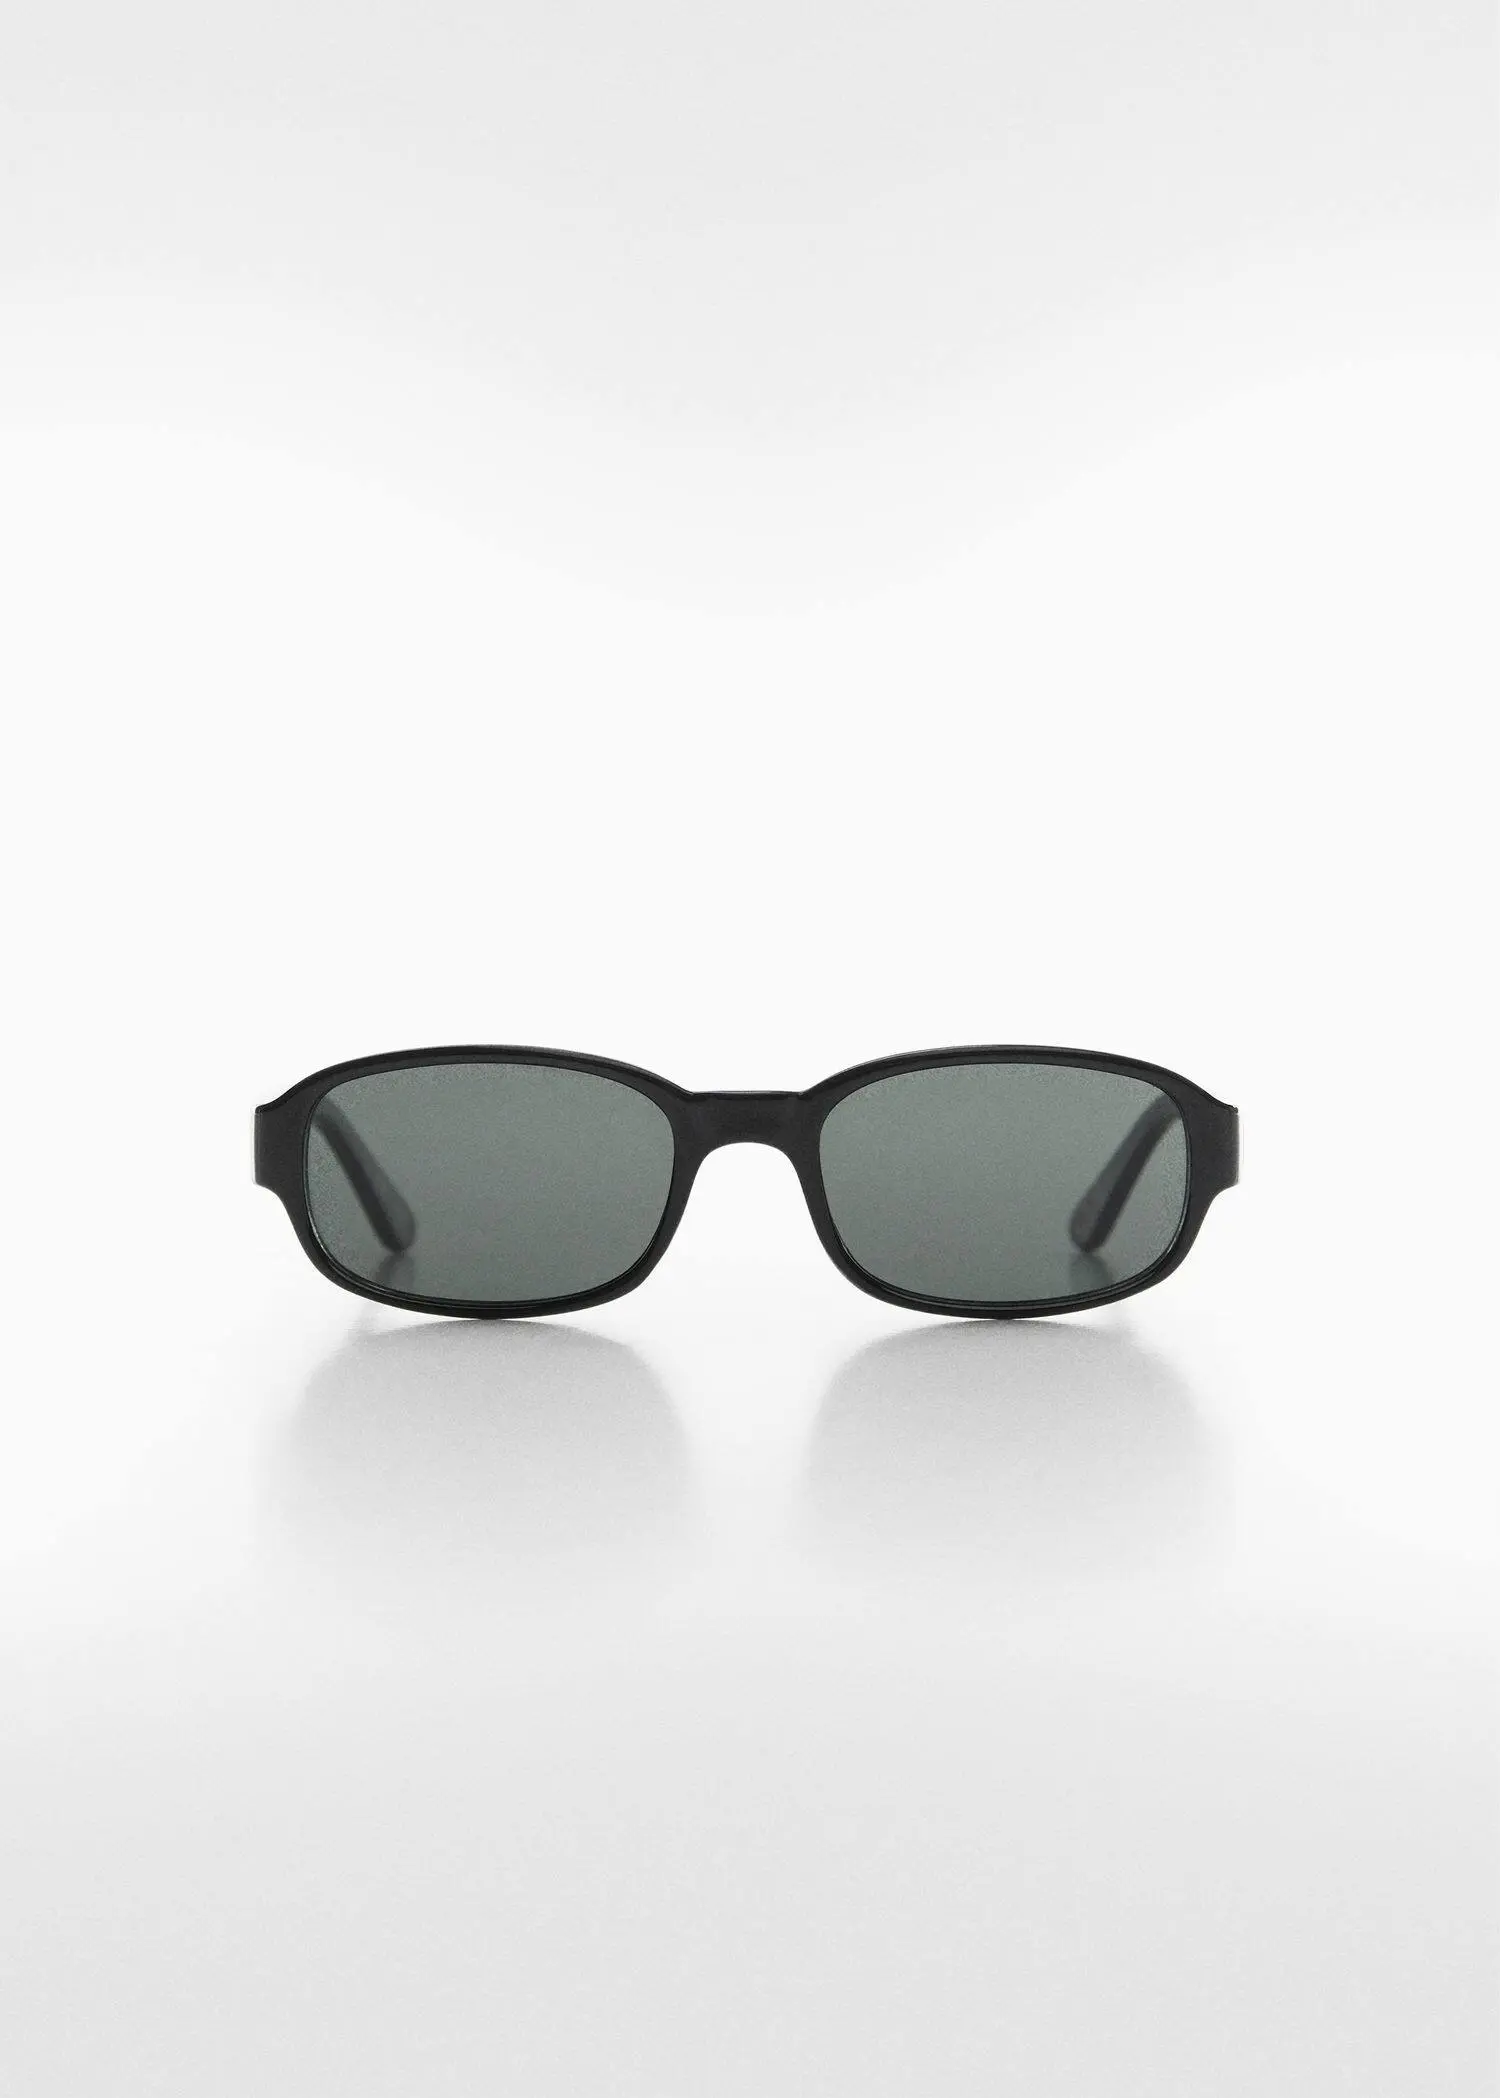 Mango Retro style sunglasses. a pair of sunglasses on a white surface. 